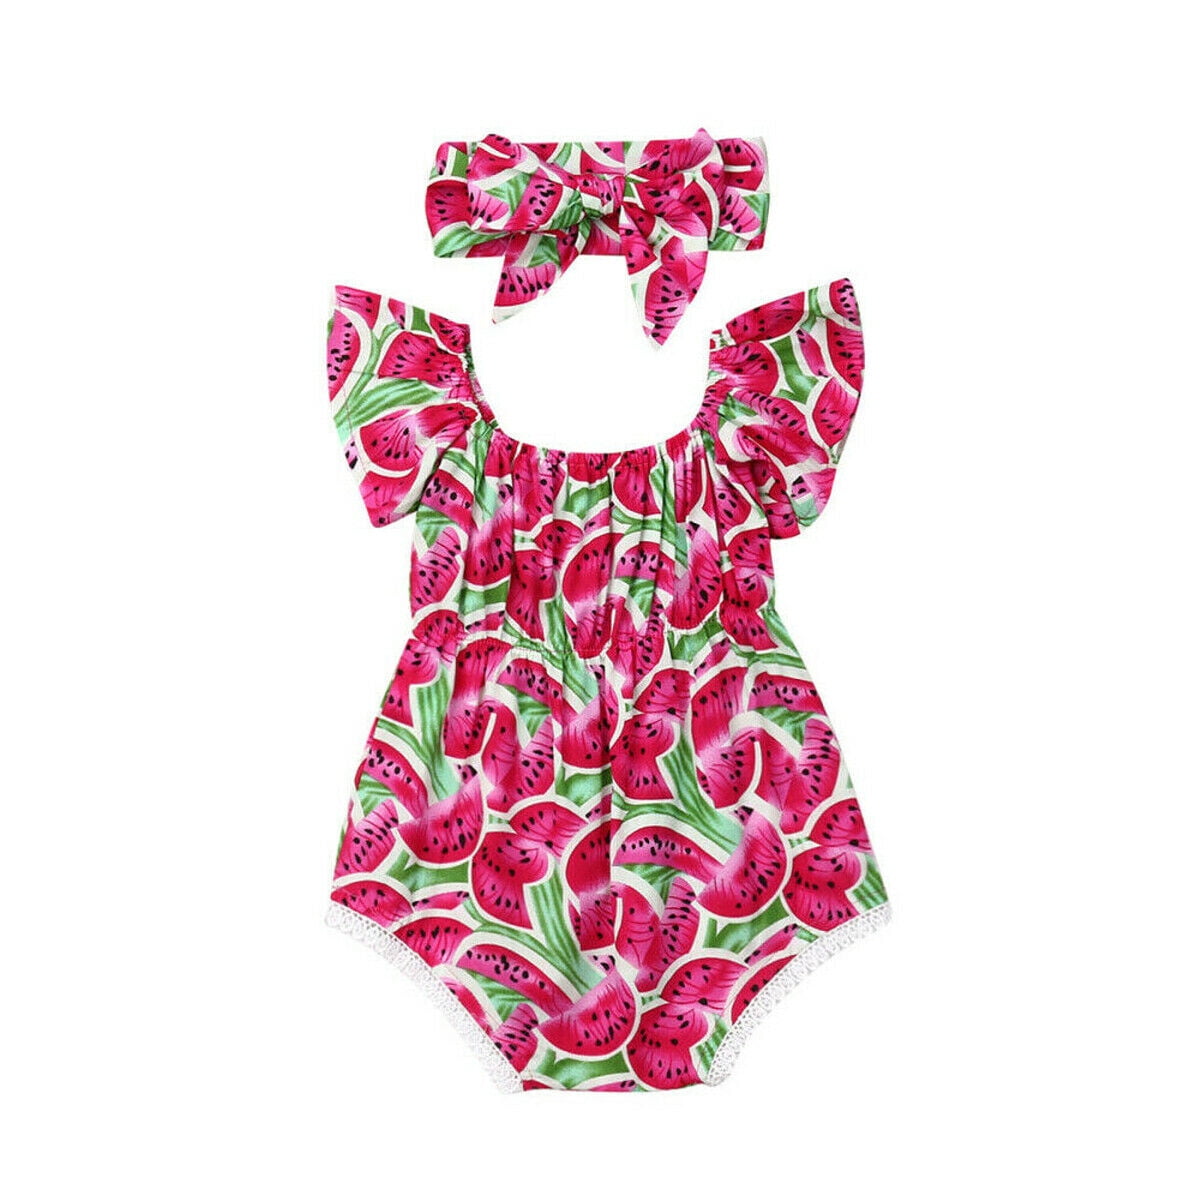 Newborn Baby Girls Kids Print Short Sleeves Romper Bodysuit Outfits Jumpsuits UK 